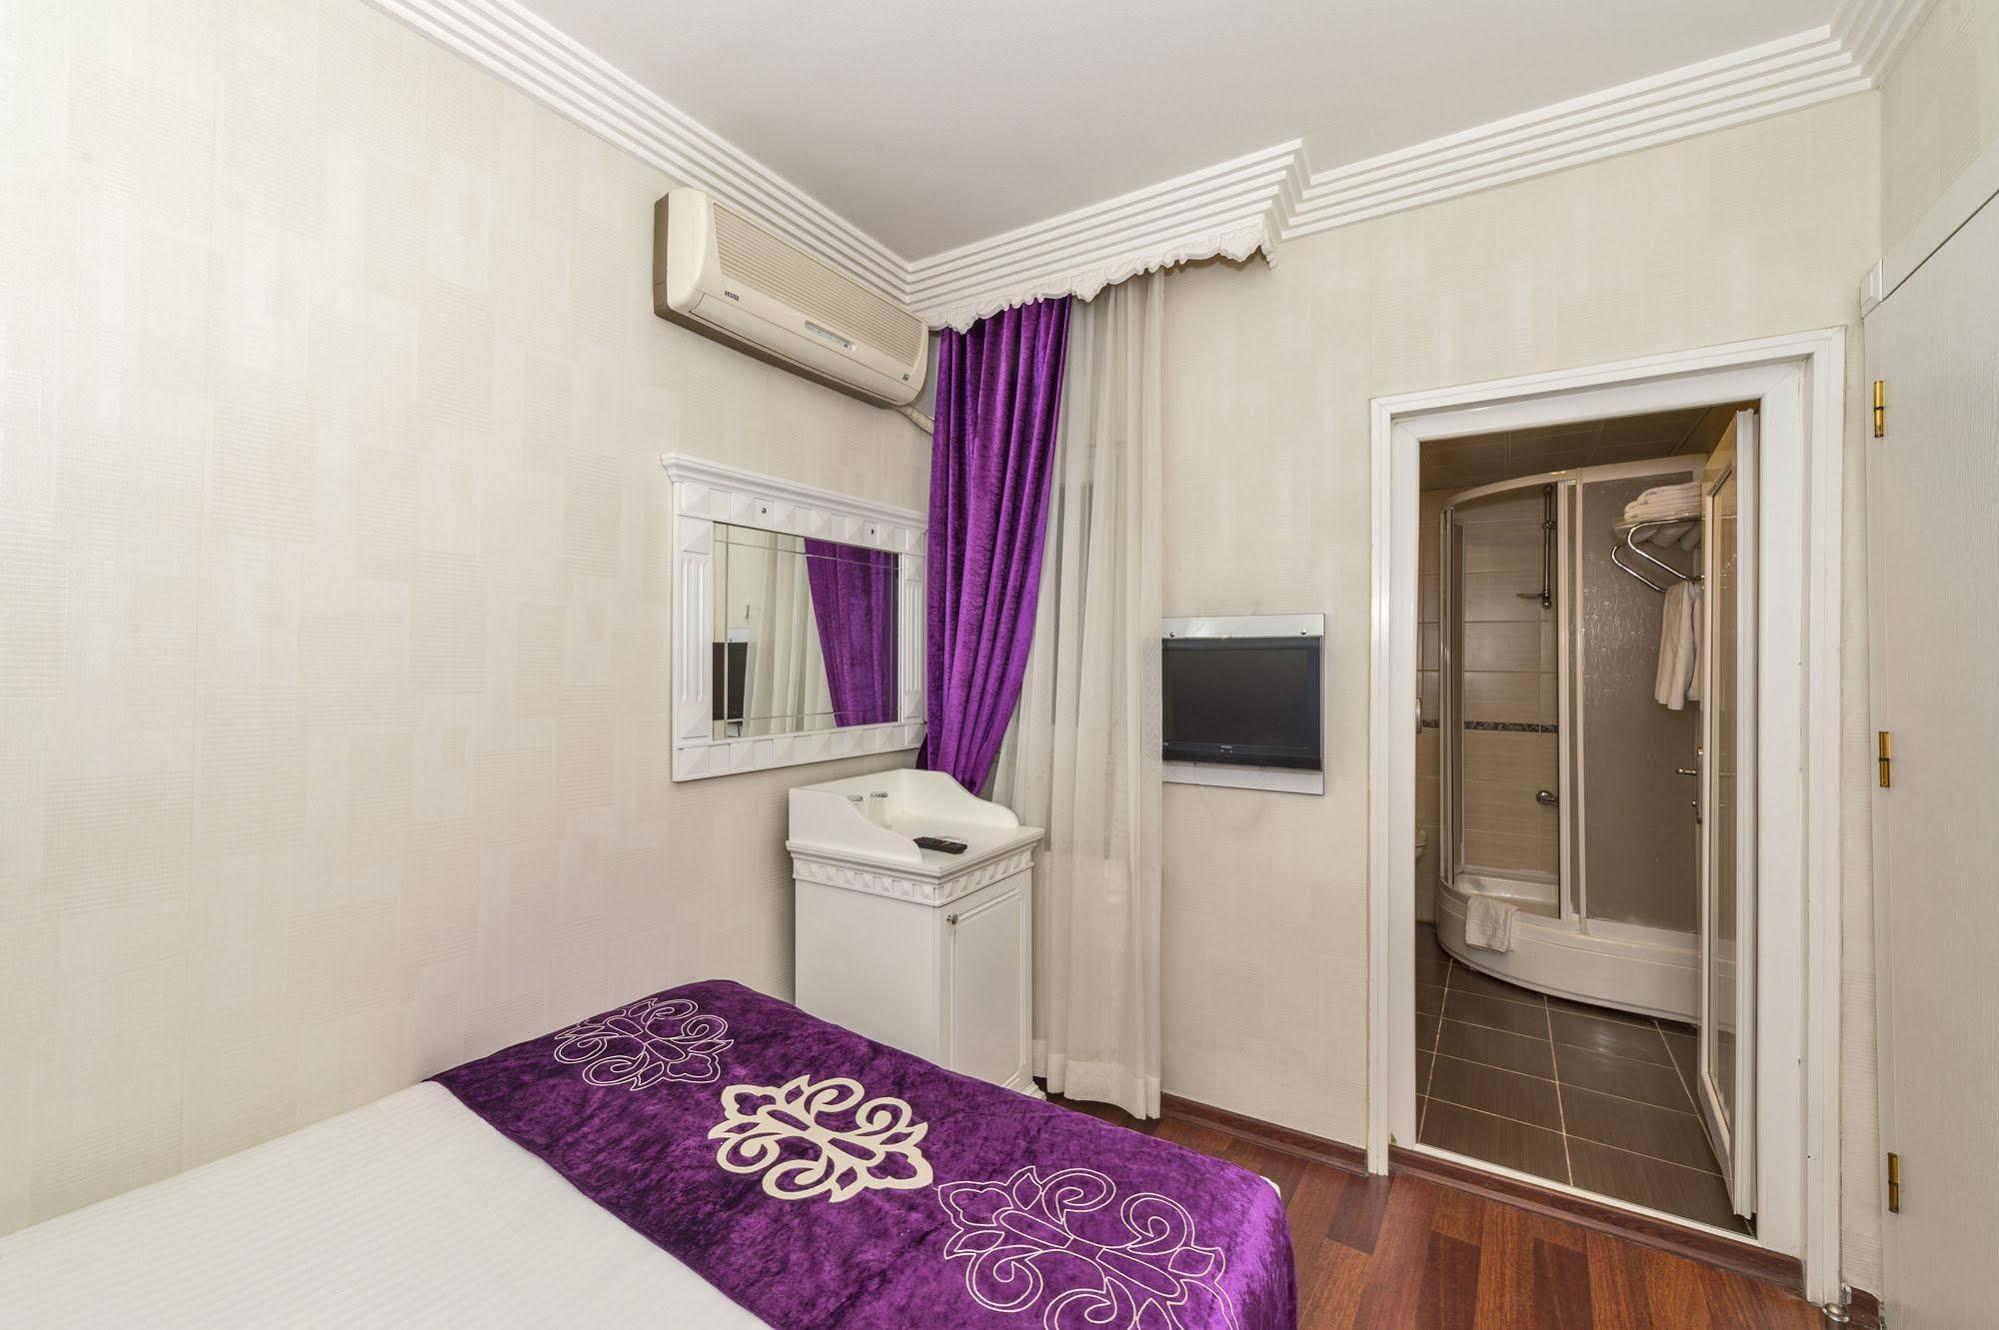 ISTANBUL HOLIDAY HOTEL